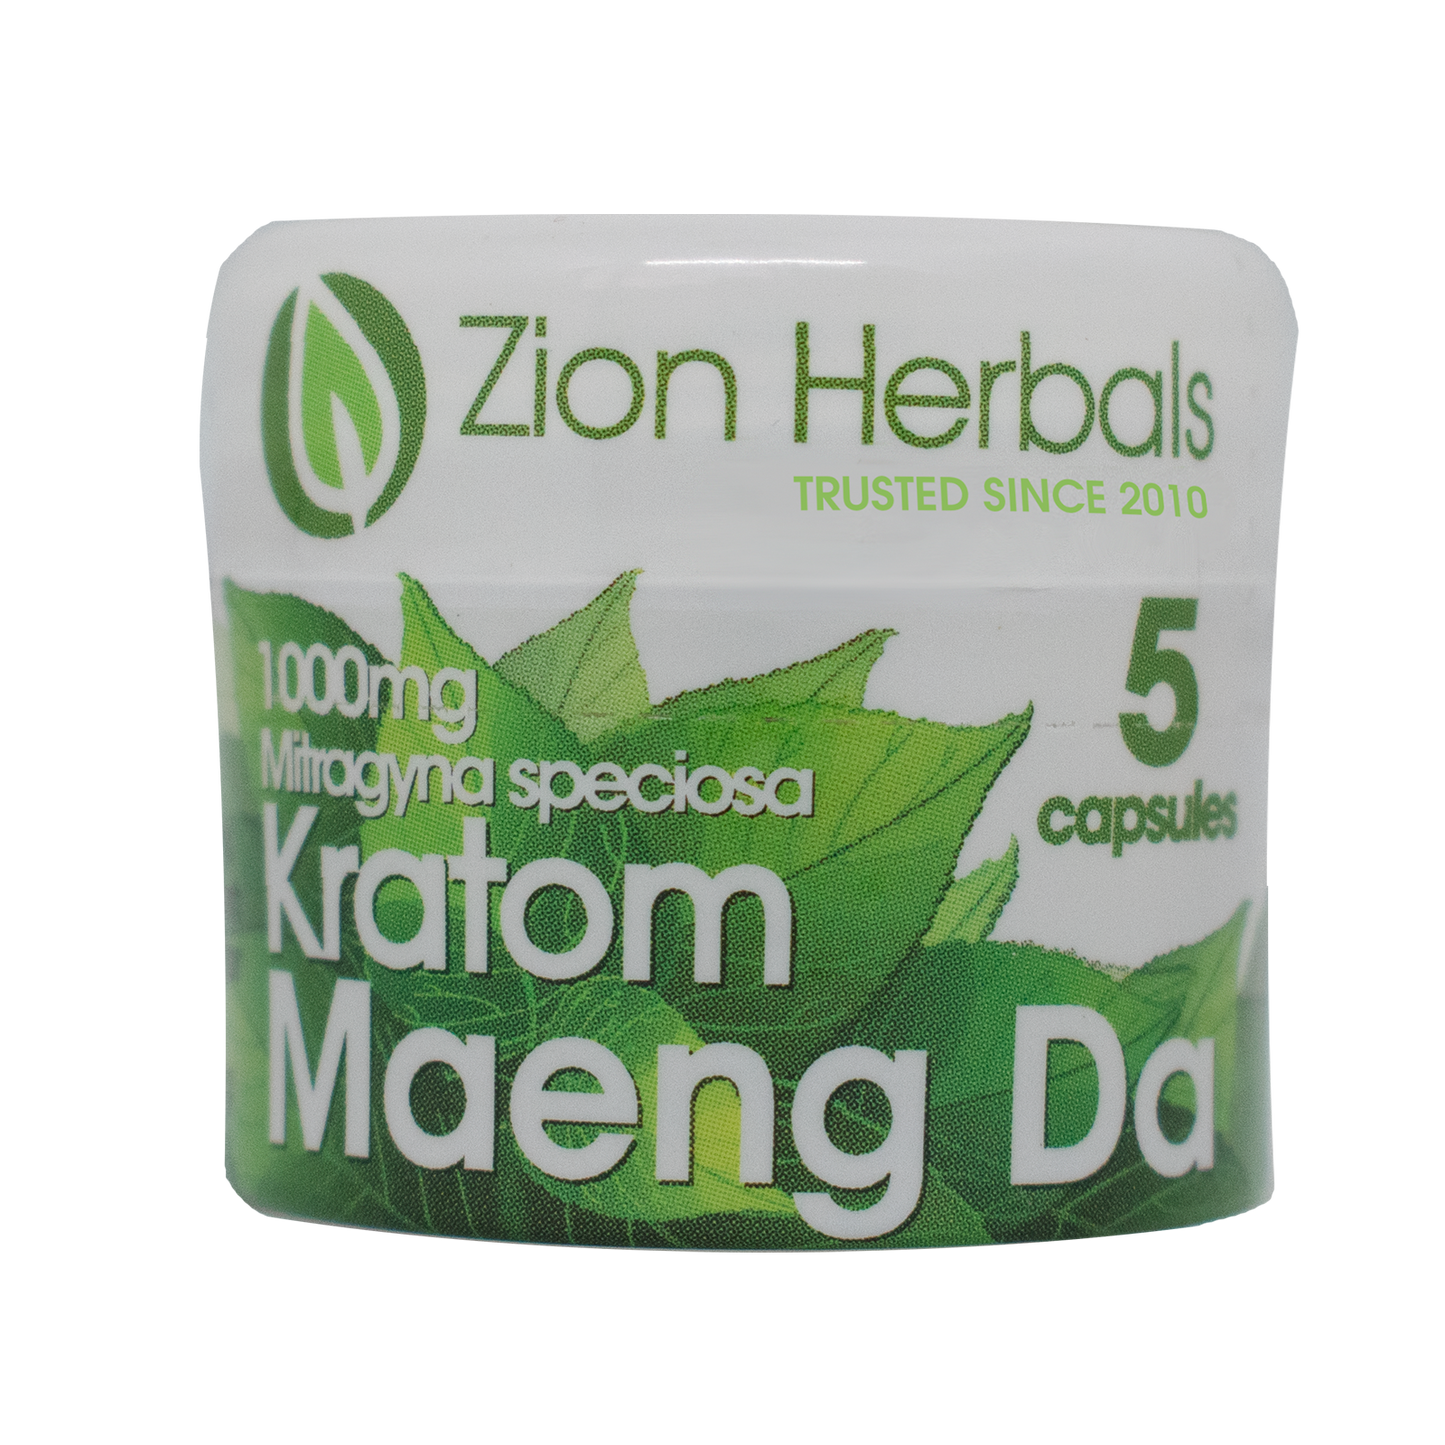 Zion Herbals Maeng Da 5 Capsule Jar